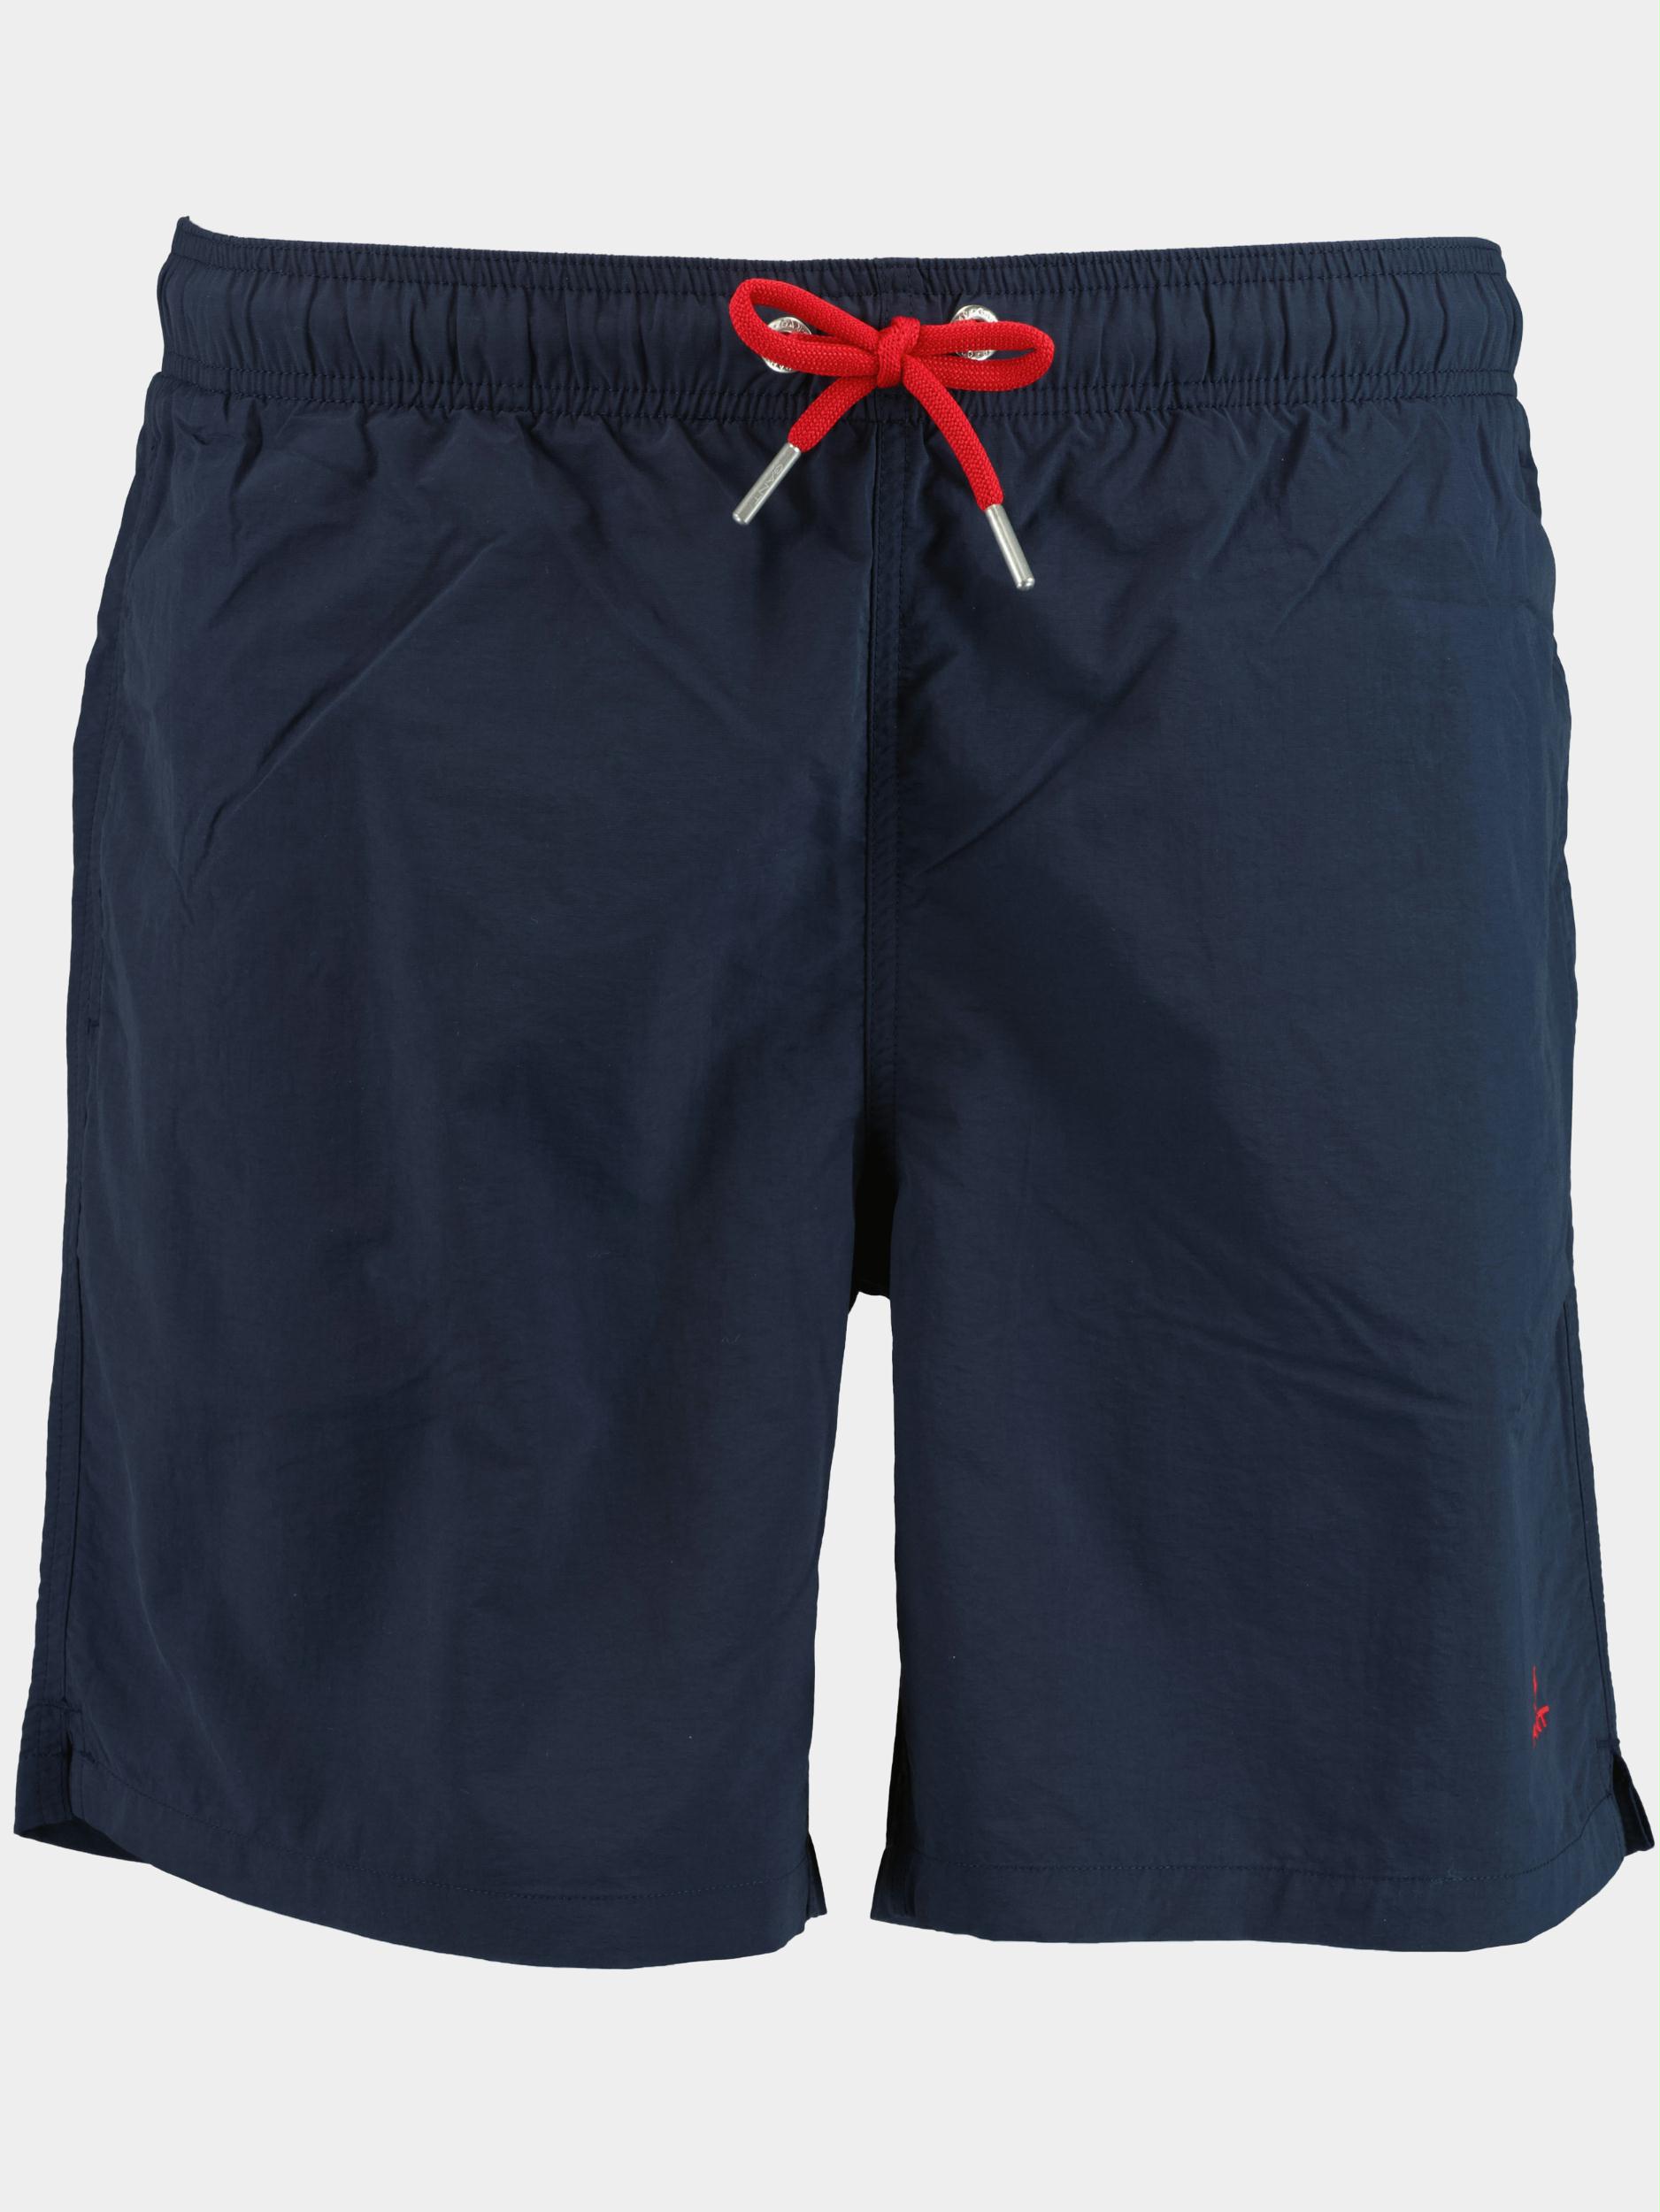 23% Korting Gant Blauw LC Shorts 922016002/410 Bos Men Shop